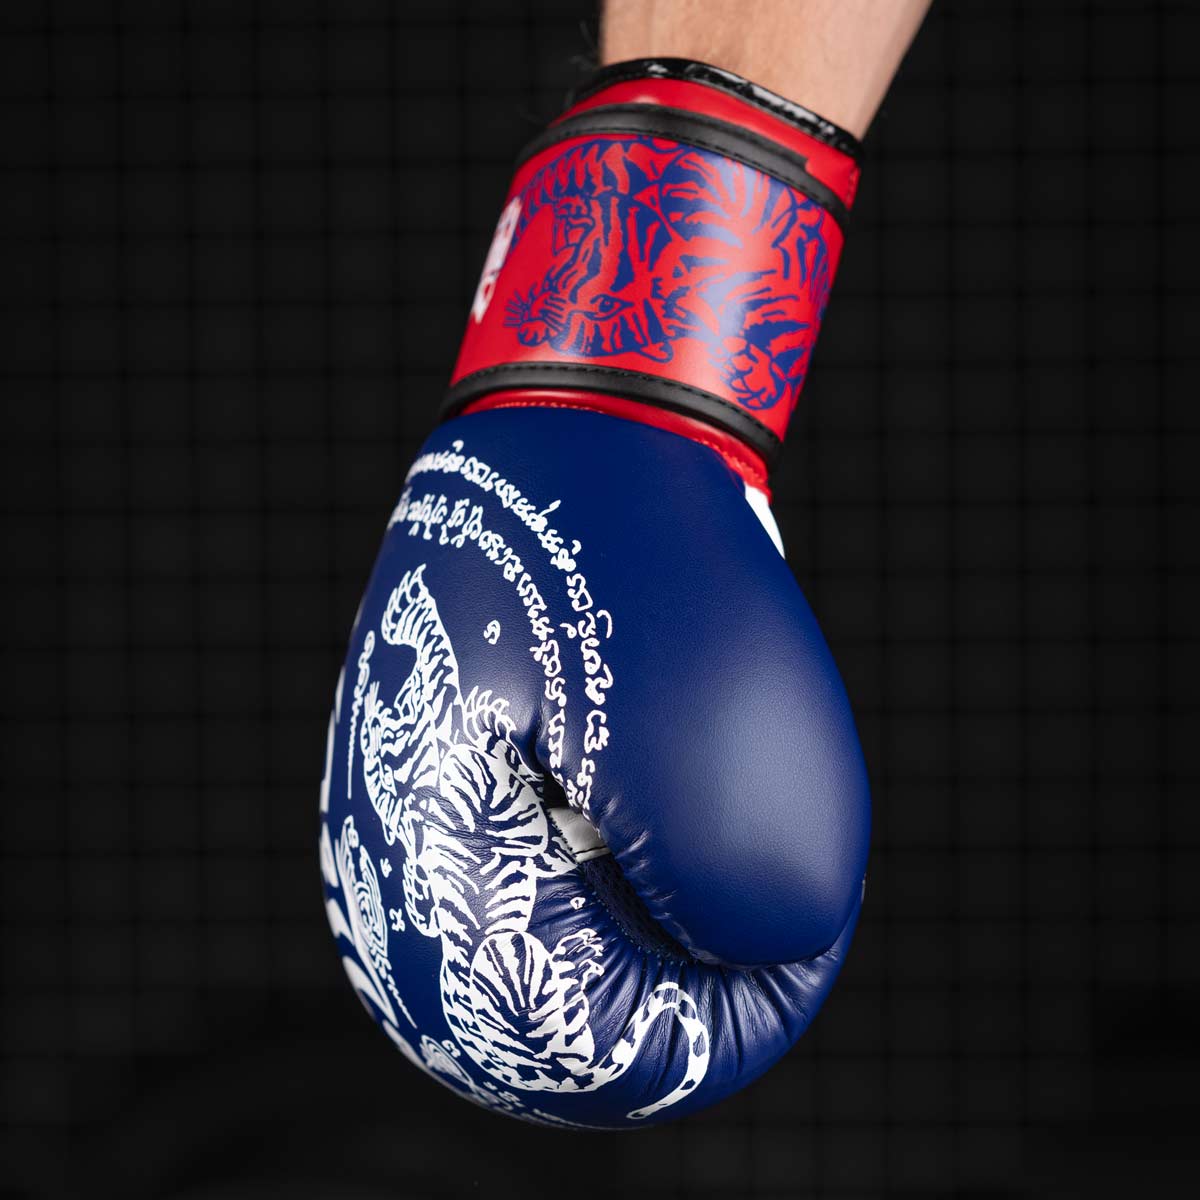 Die Phantom Muay Thai Boxhandschuhe in der Farbe Blau/Rot/Weiss. 